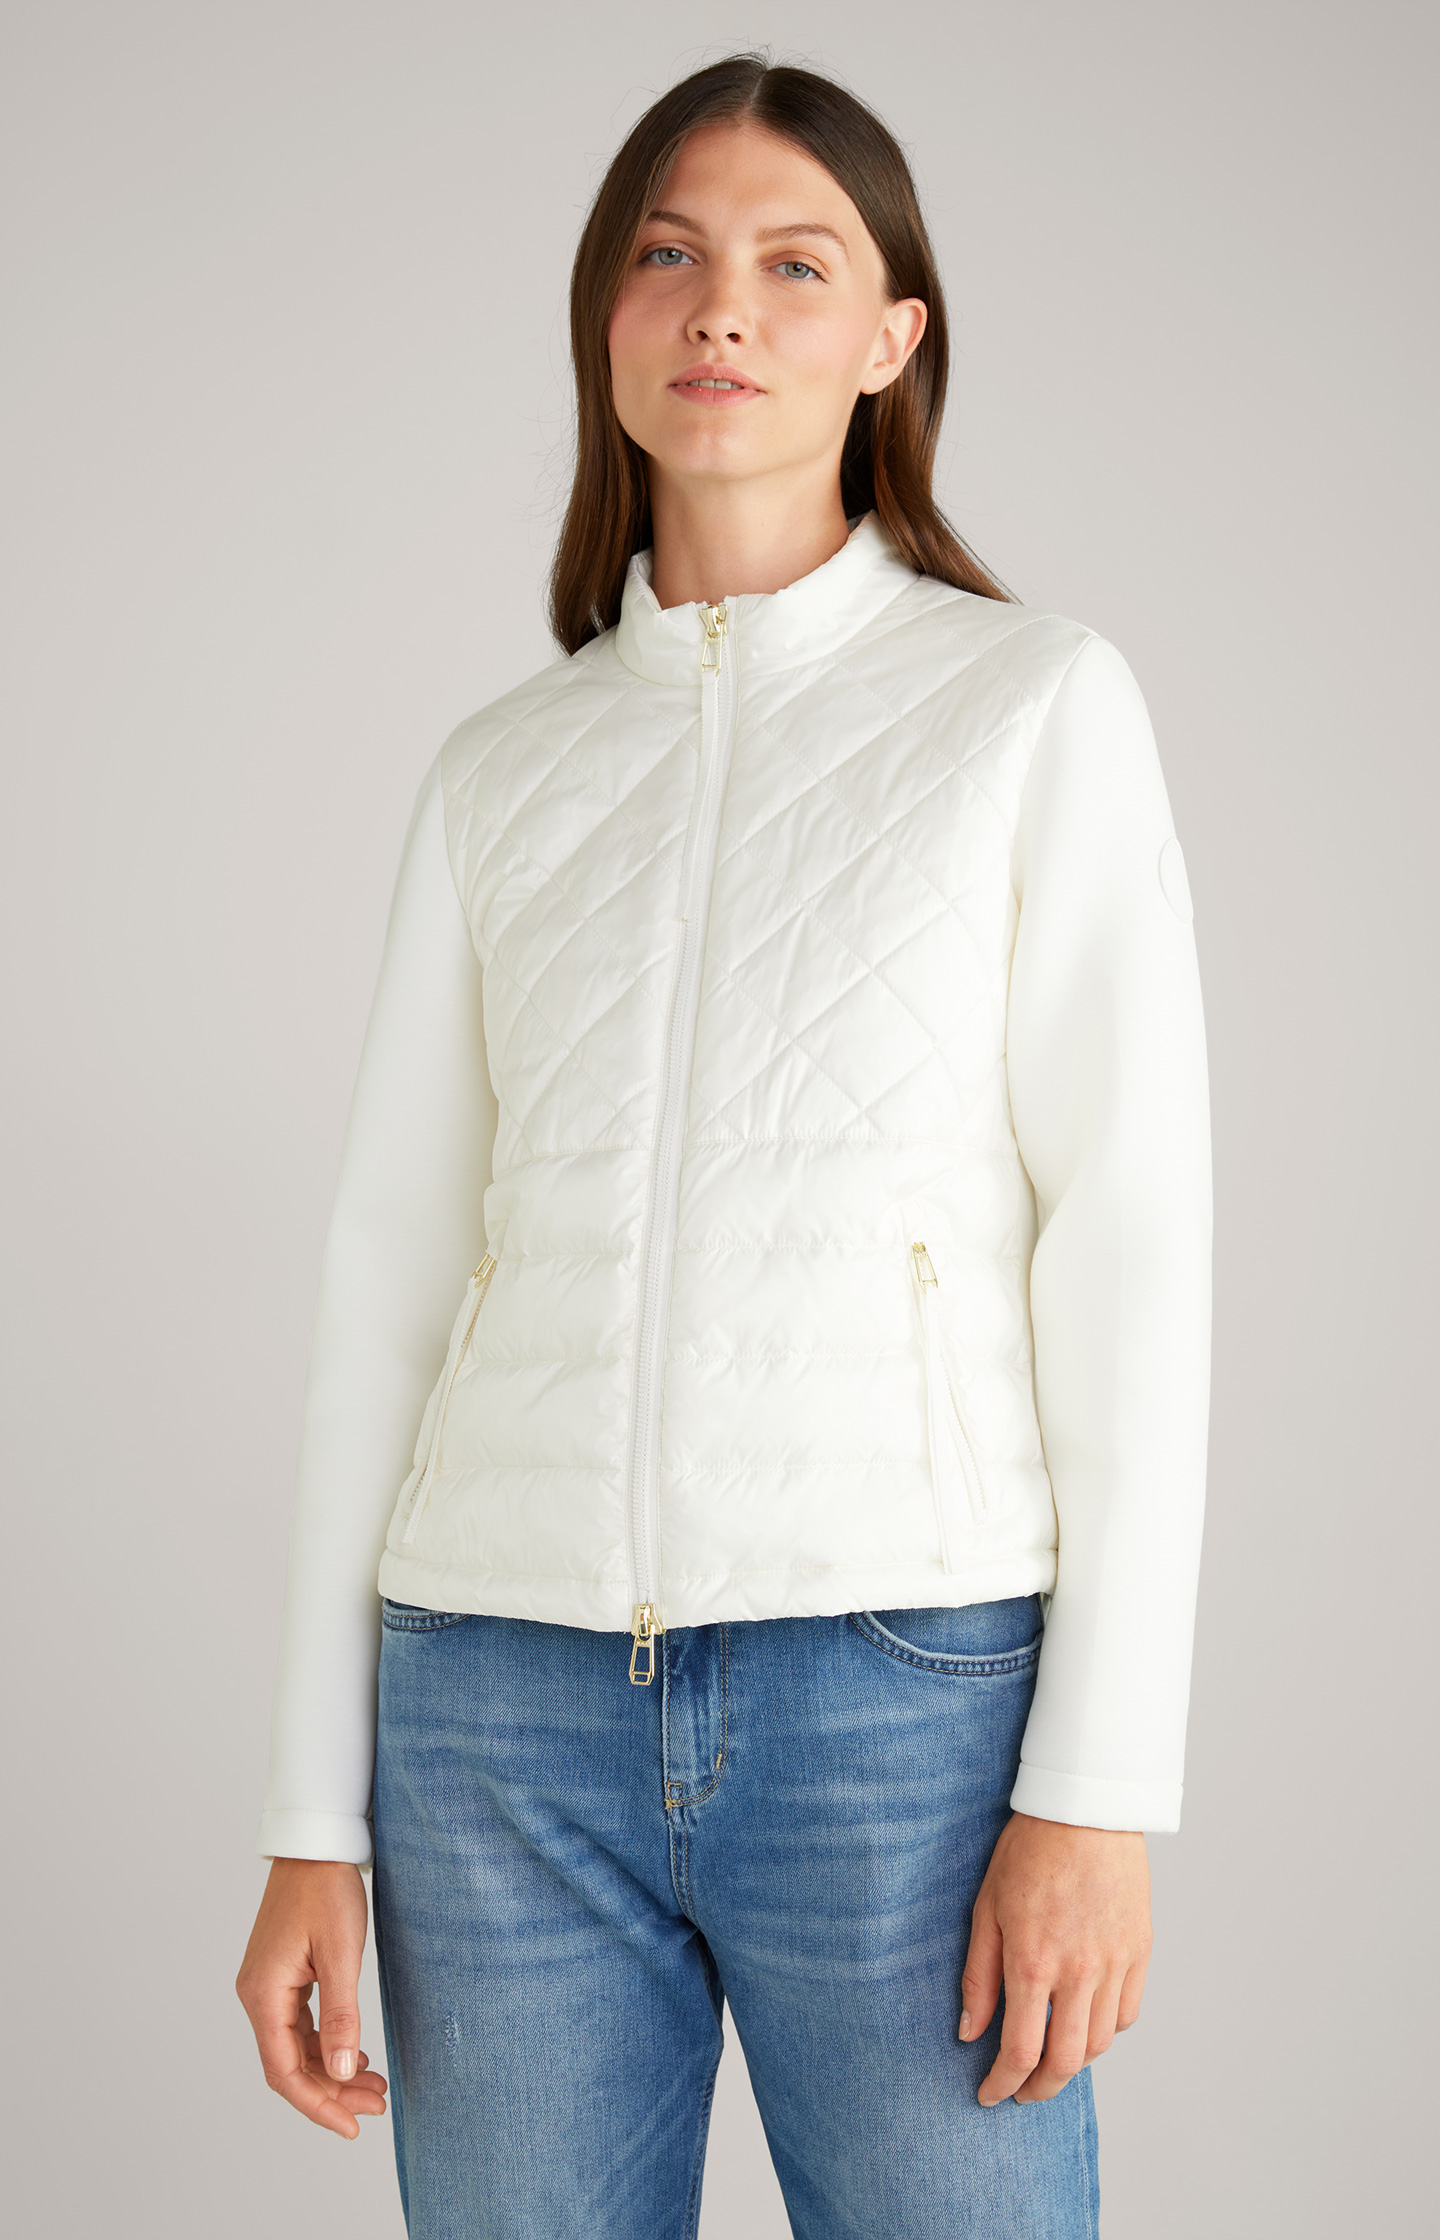 Jackets And Coats | Clothing*JOOP Jackets And Coats | Clothing Nylon Jacket in